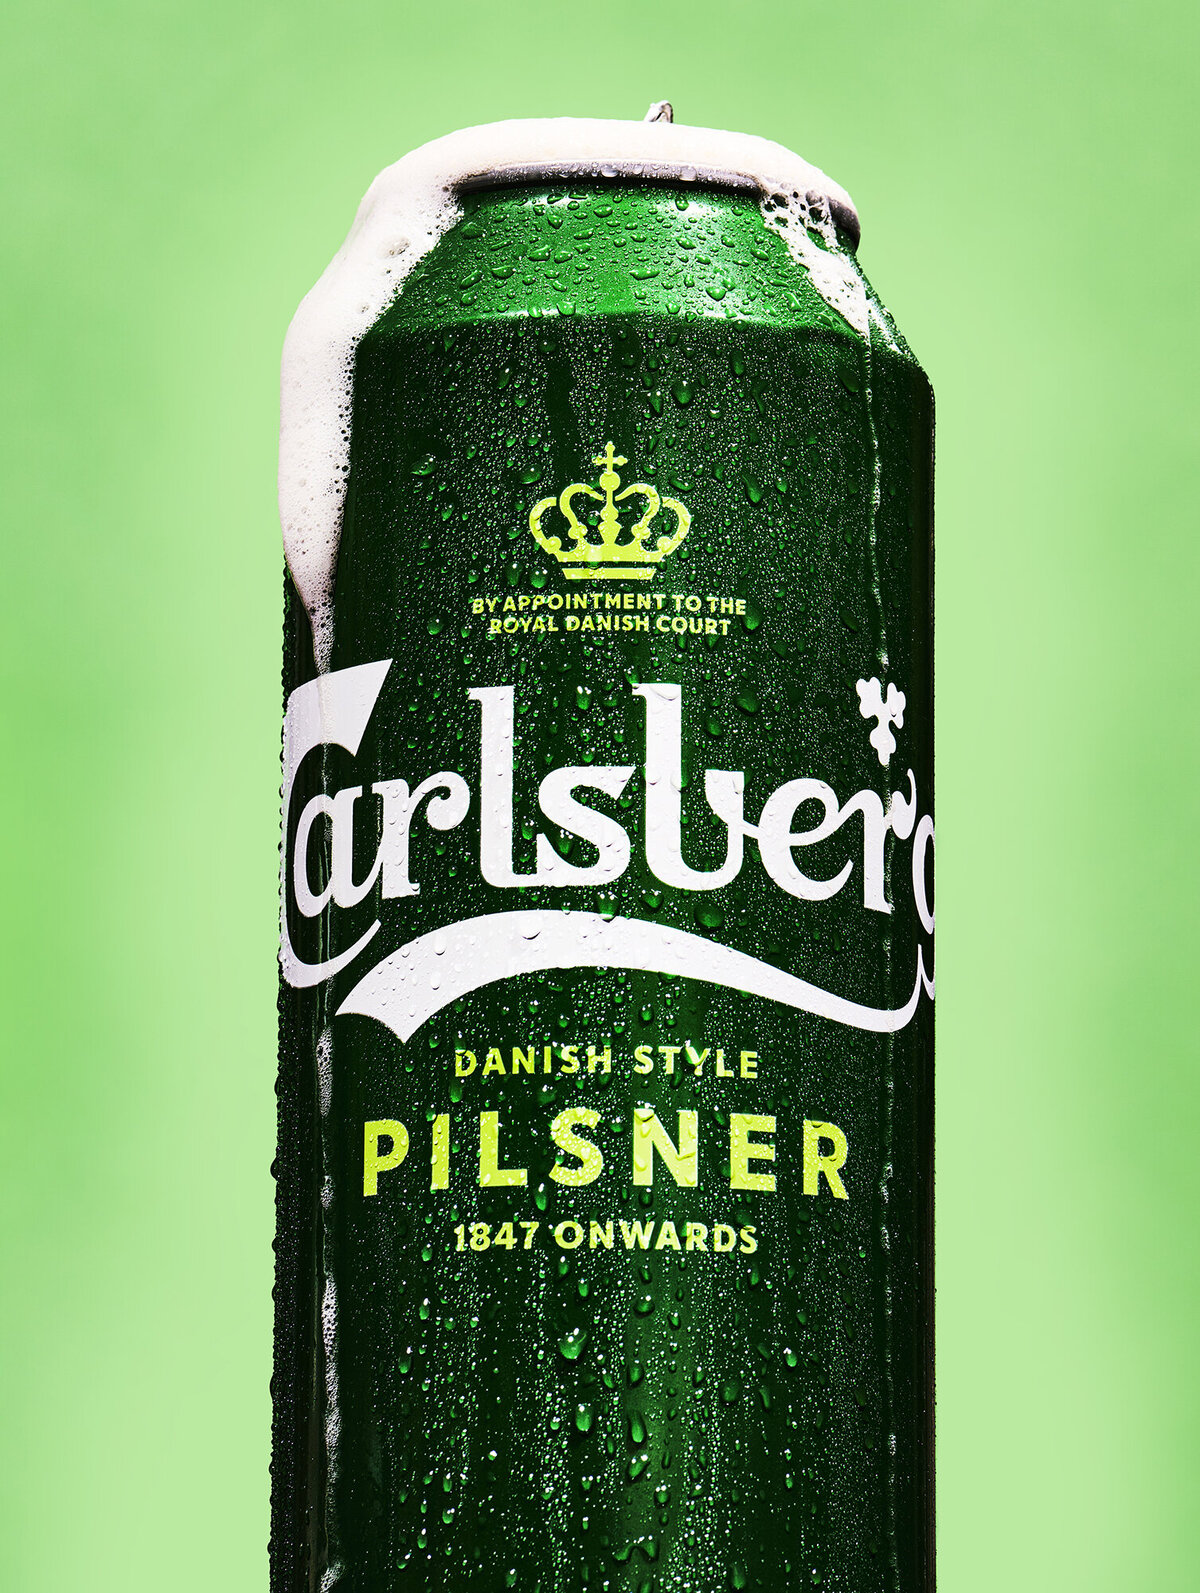 carlsberg pilsner product photography